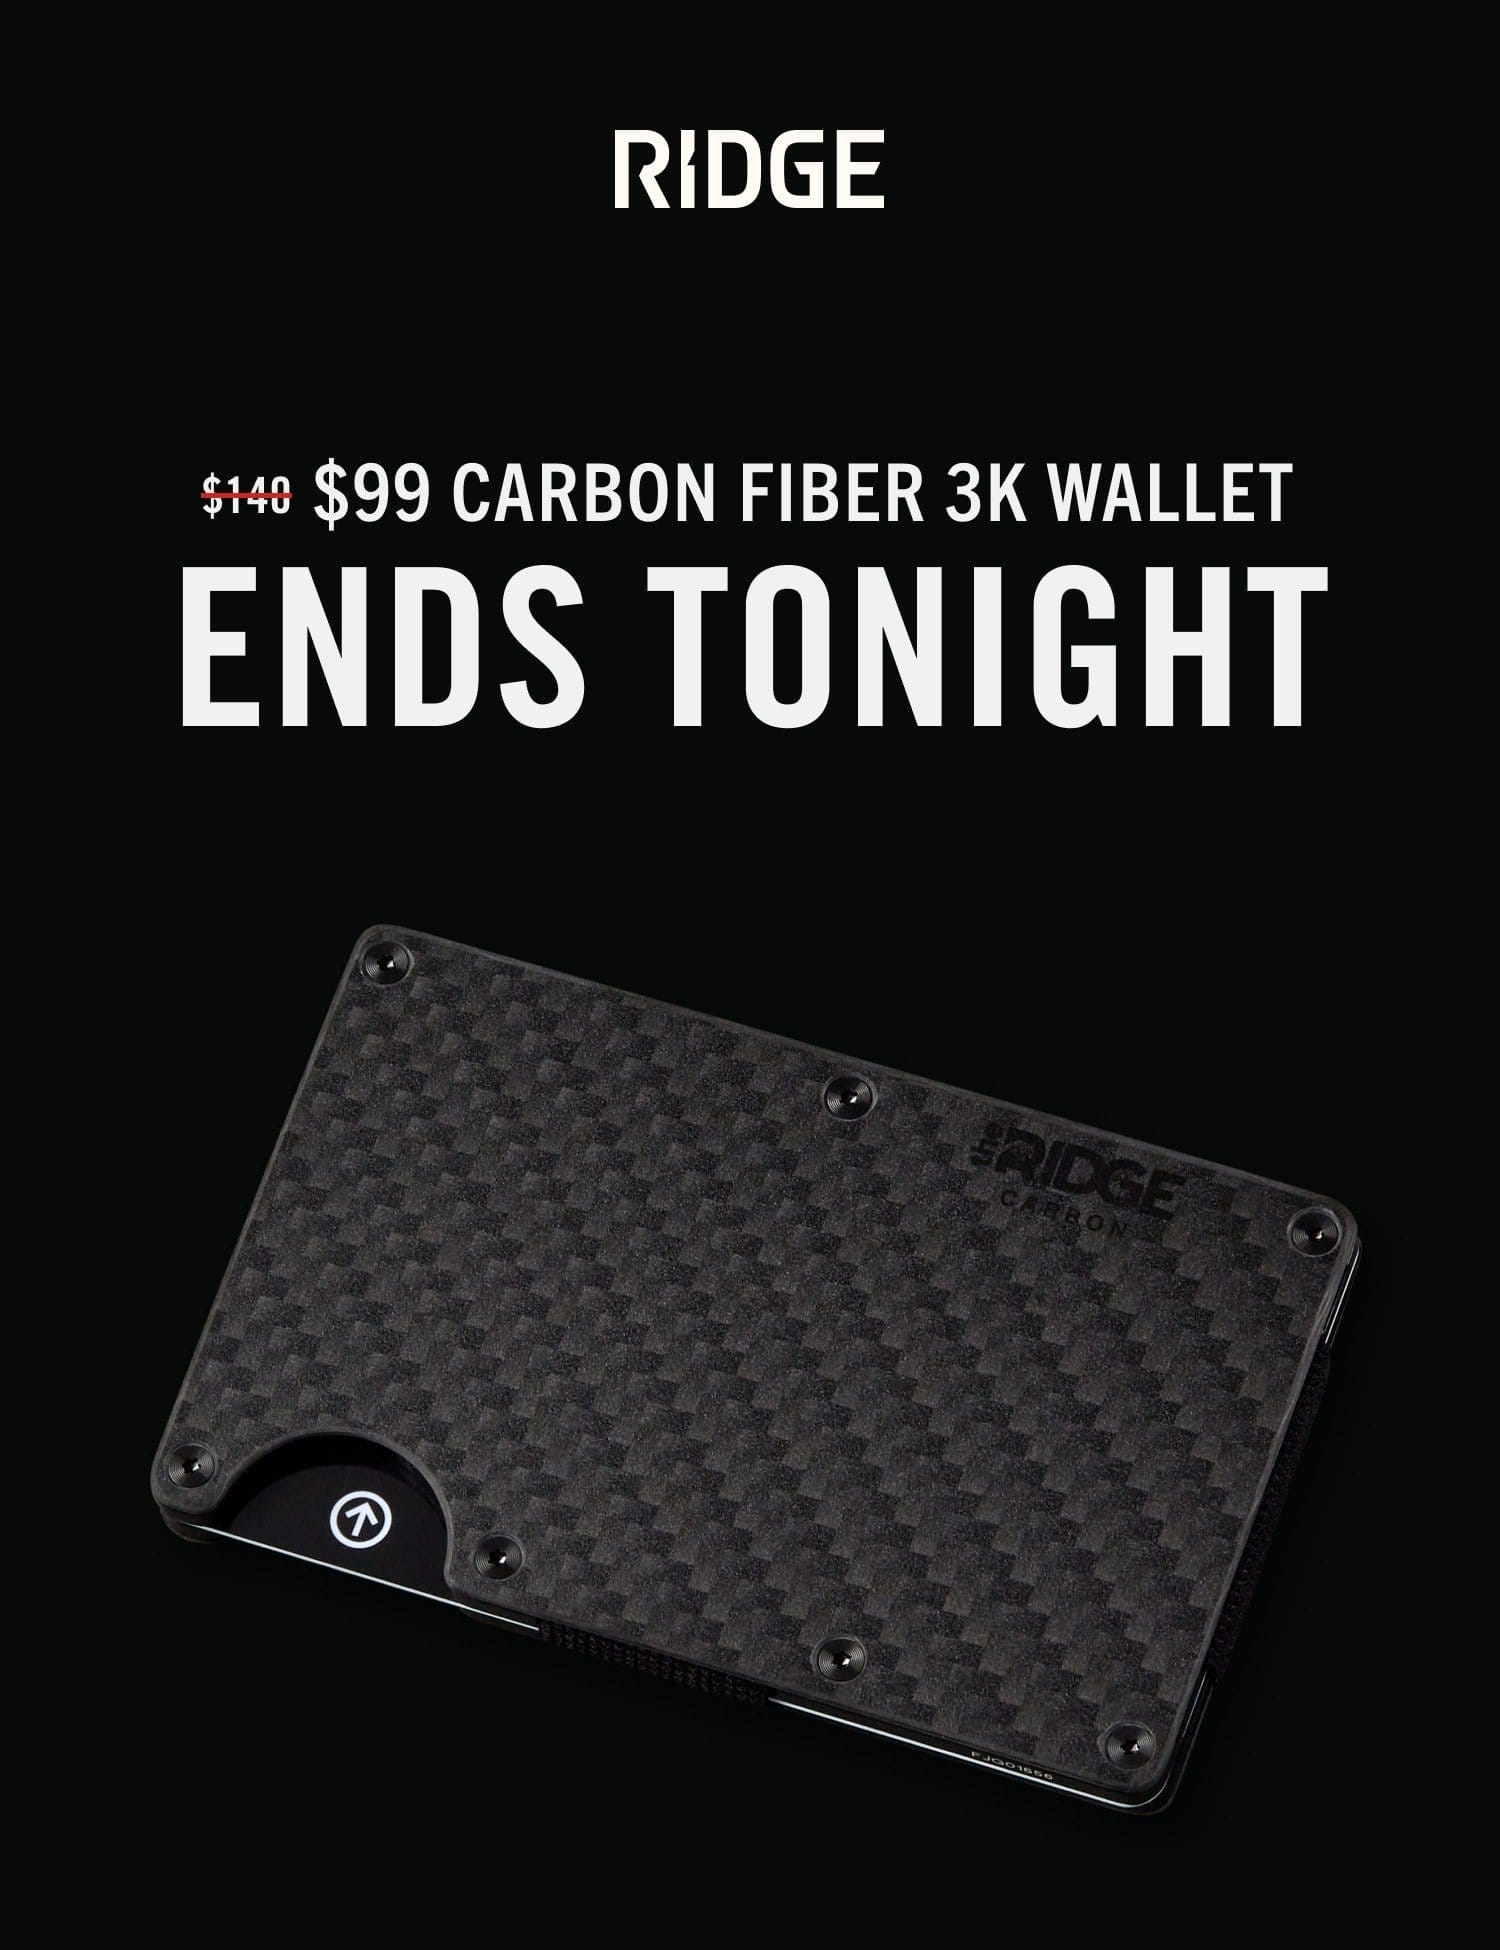 ENDS Tonight: \\$99 Carbon Fiber 3K Wallet